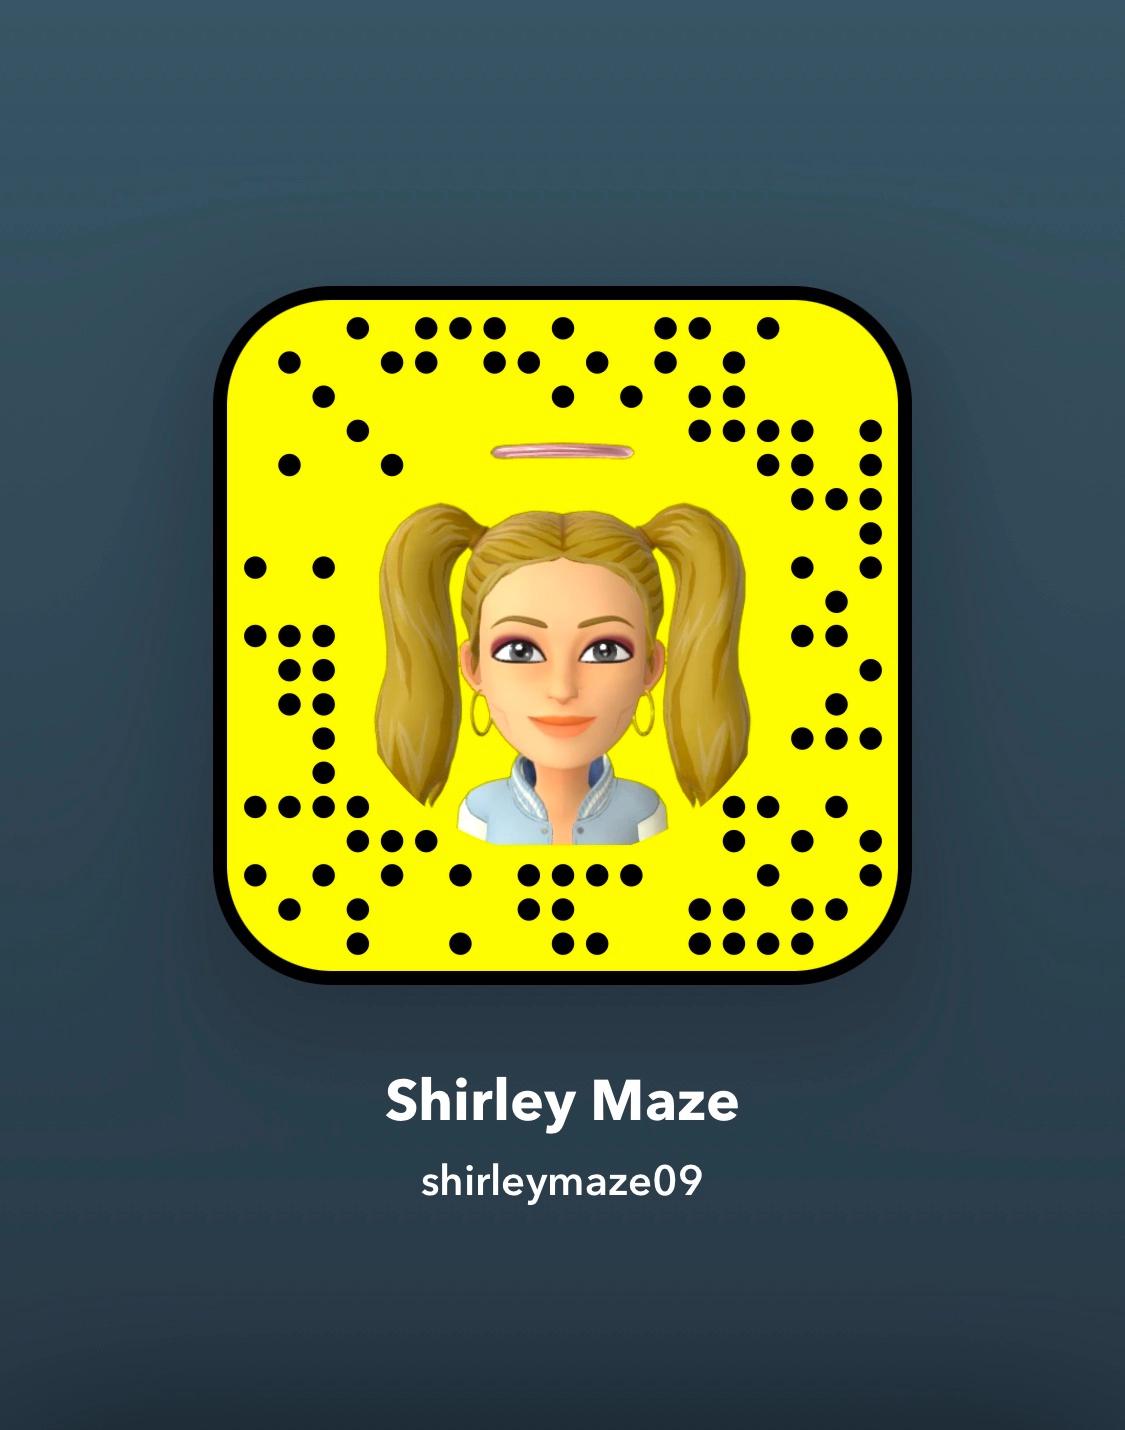 I’m down to fuck🍆💦👅 snap Shirleymaze09